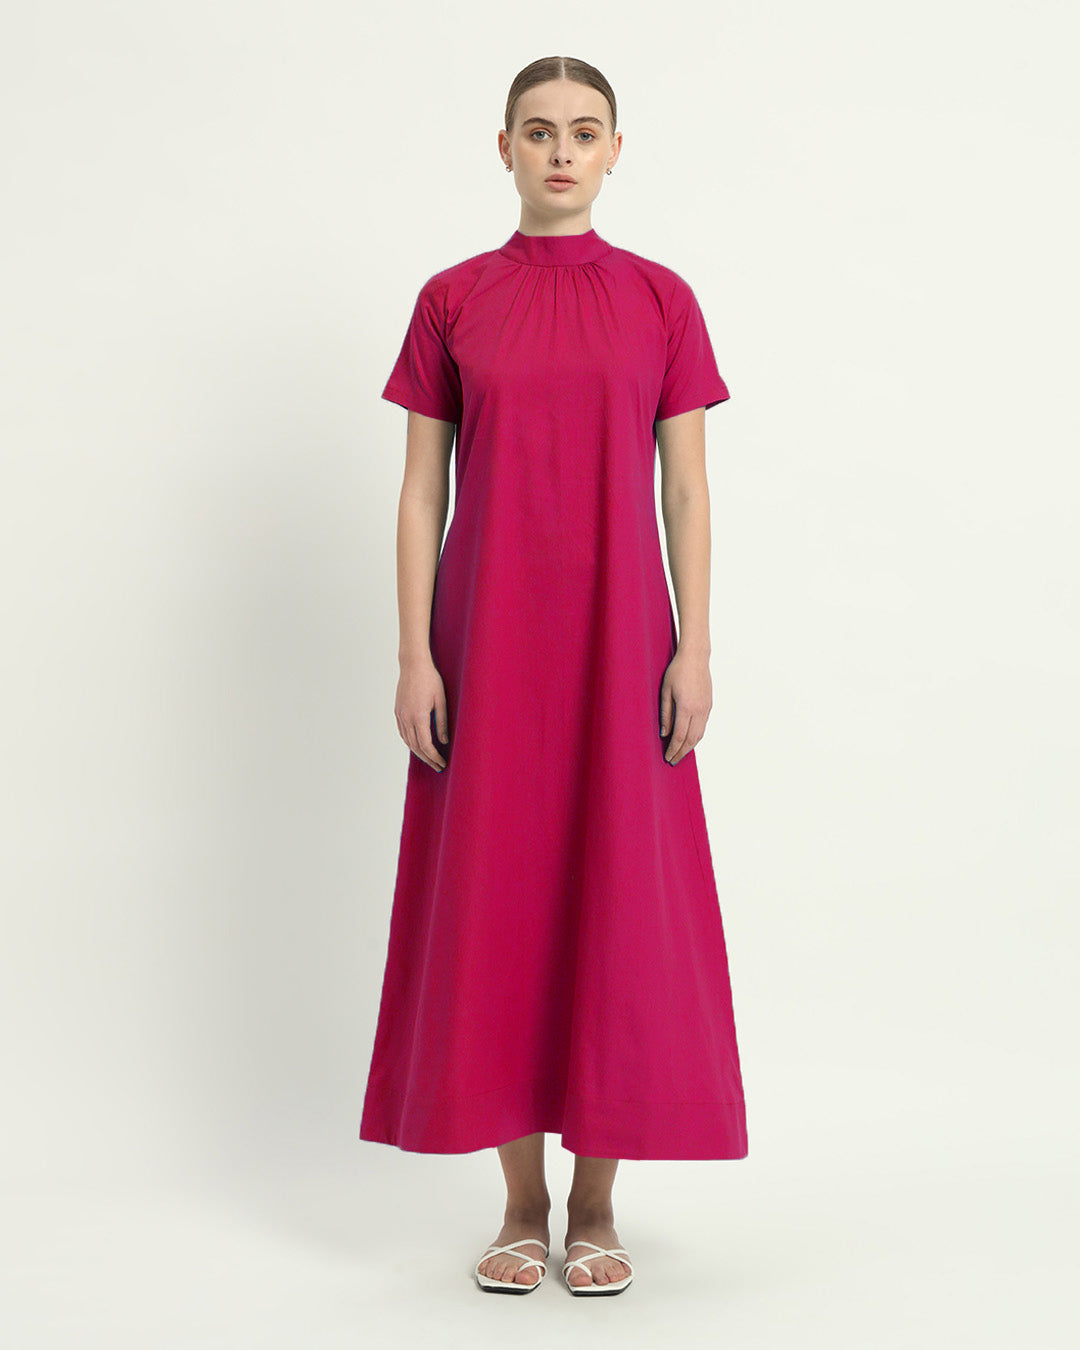 The Berry Hermon Cotton Dress